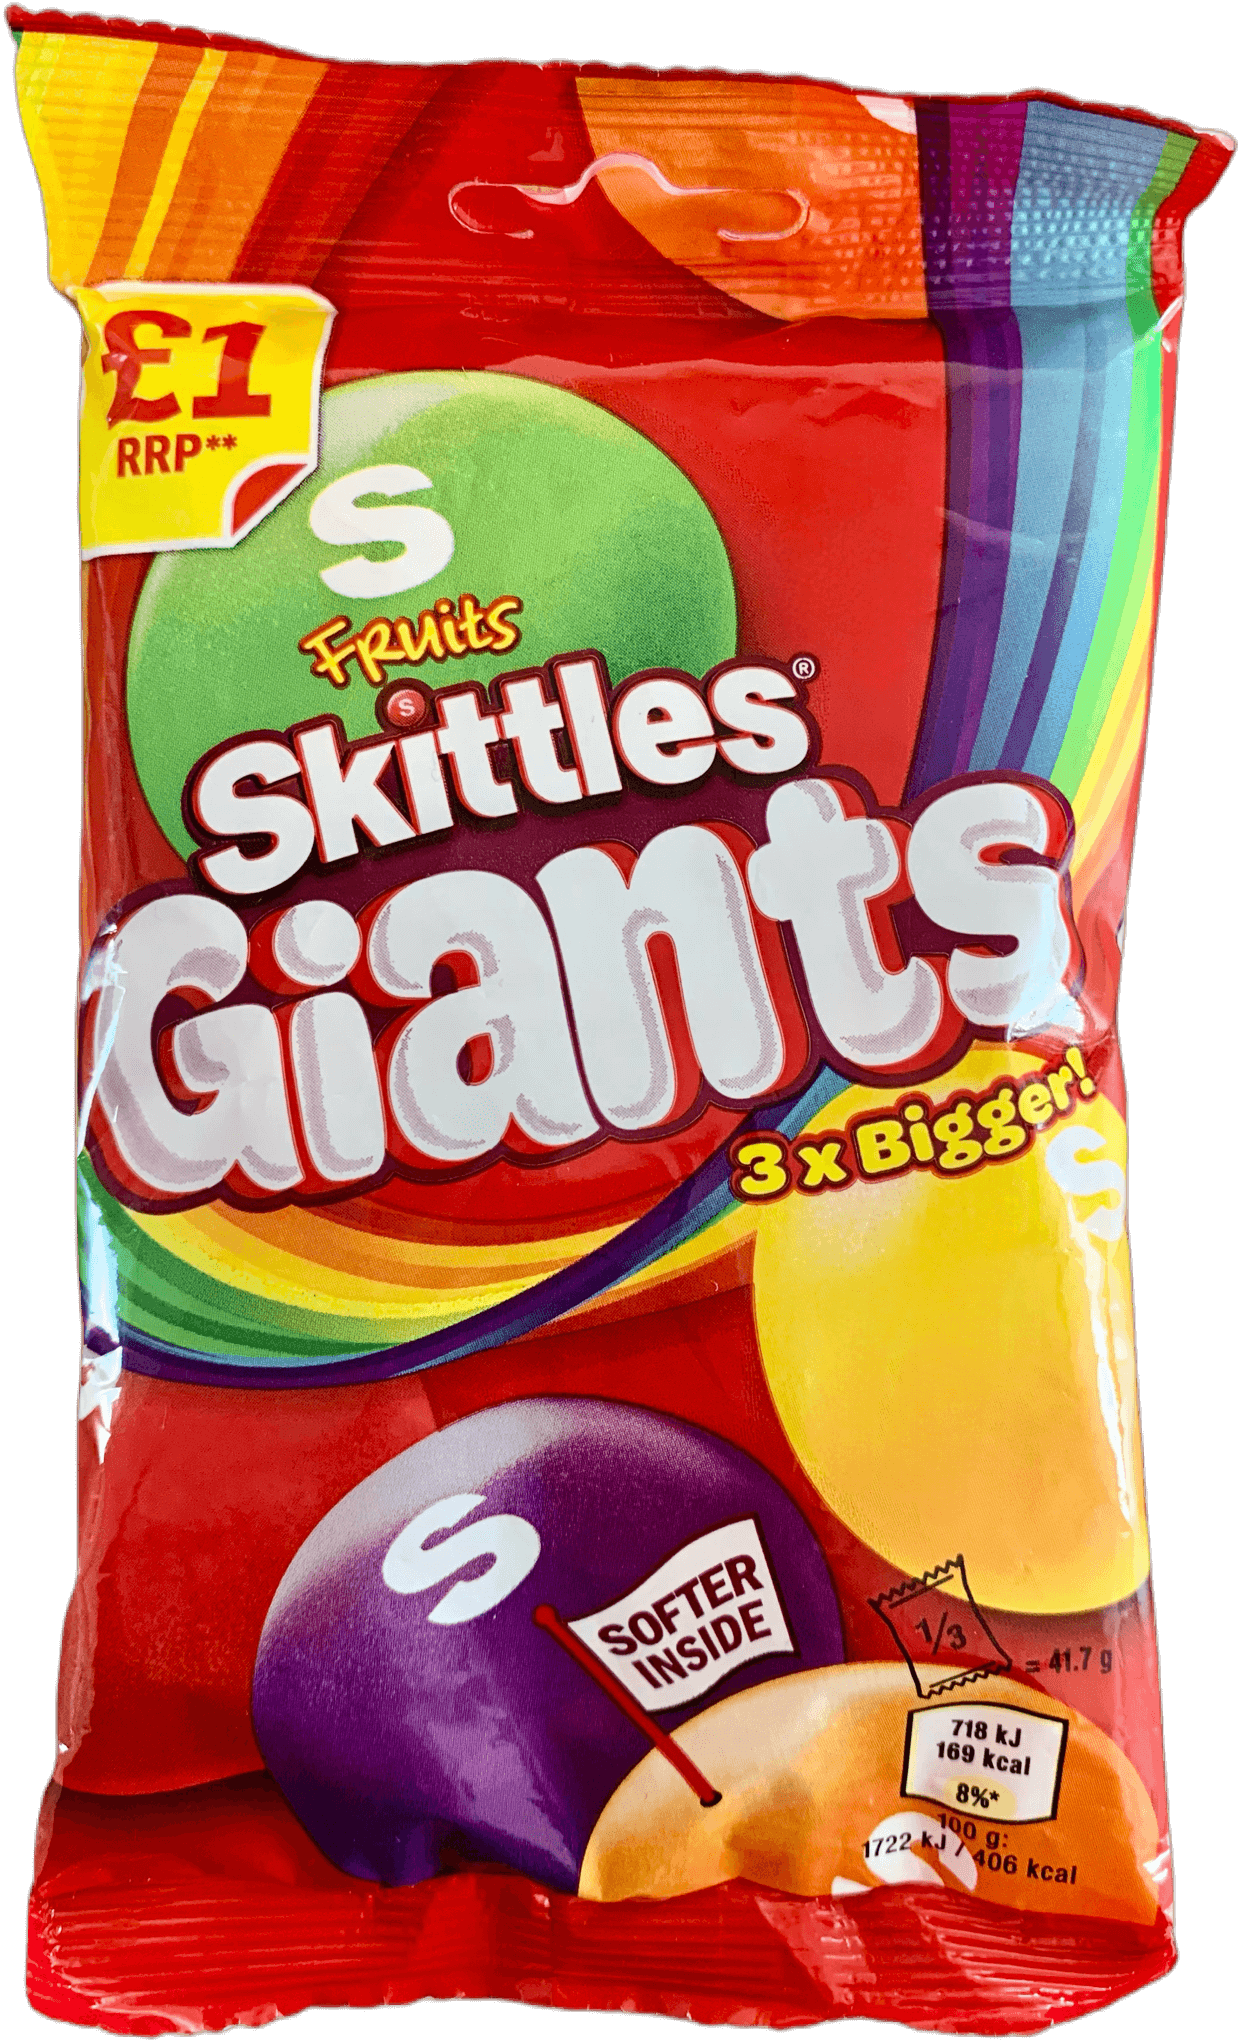 Skittle géant original